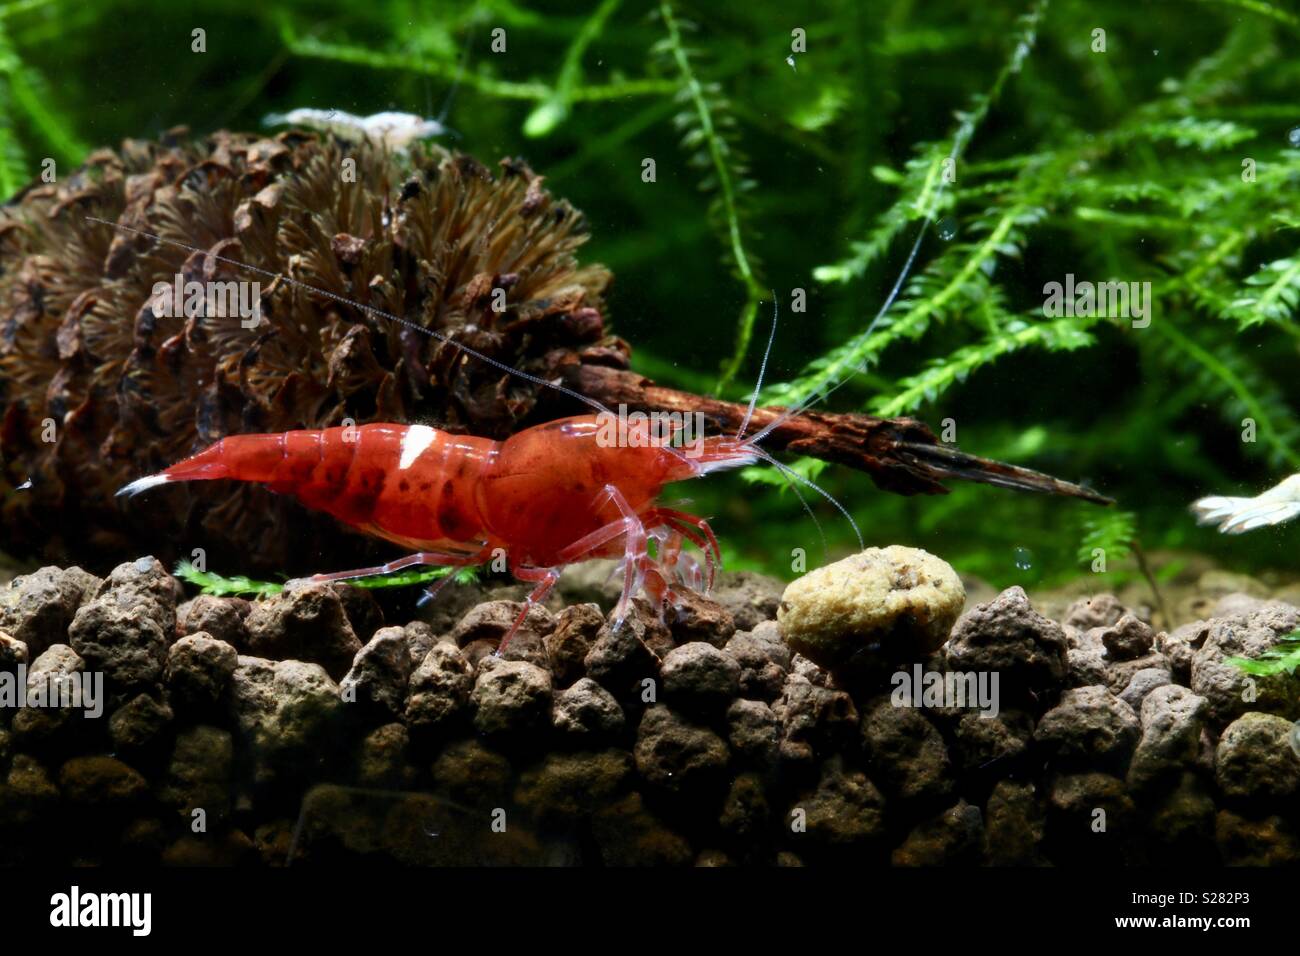 Ruby Red Taiwan Bee, aquarium pet Stock Photo - Alamy